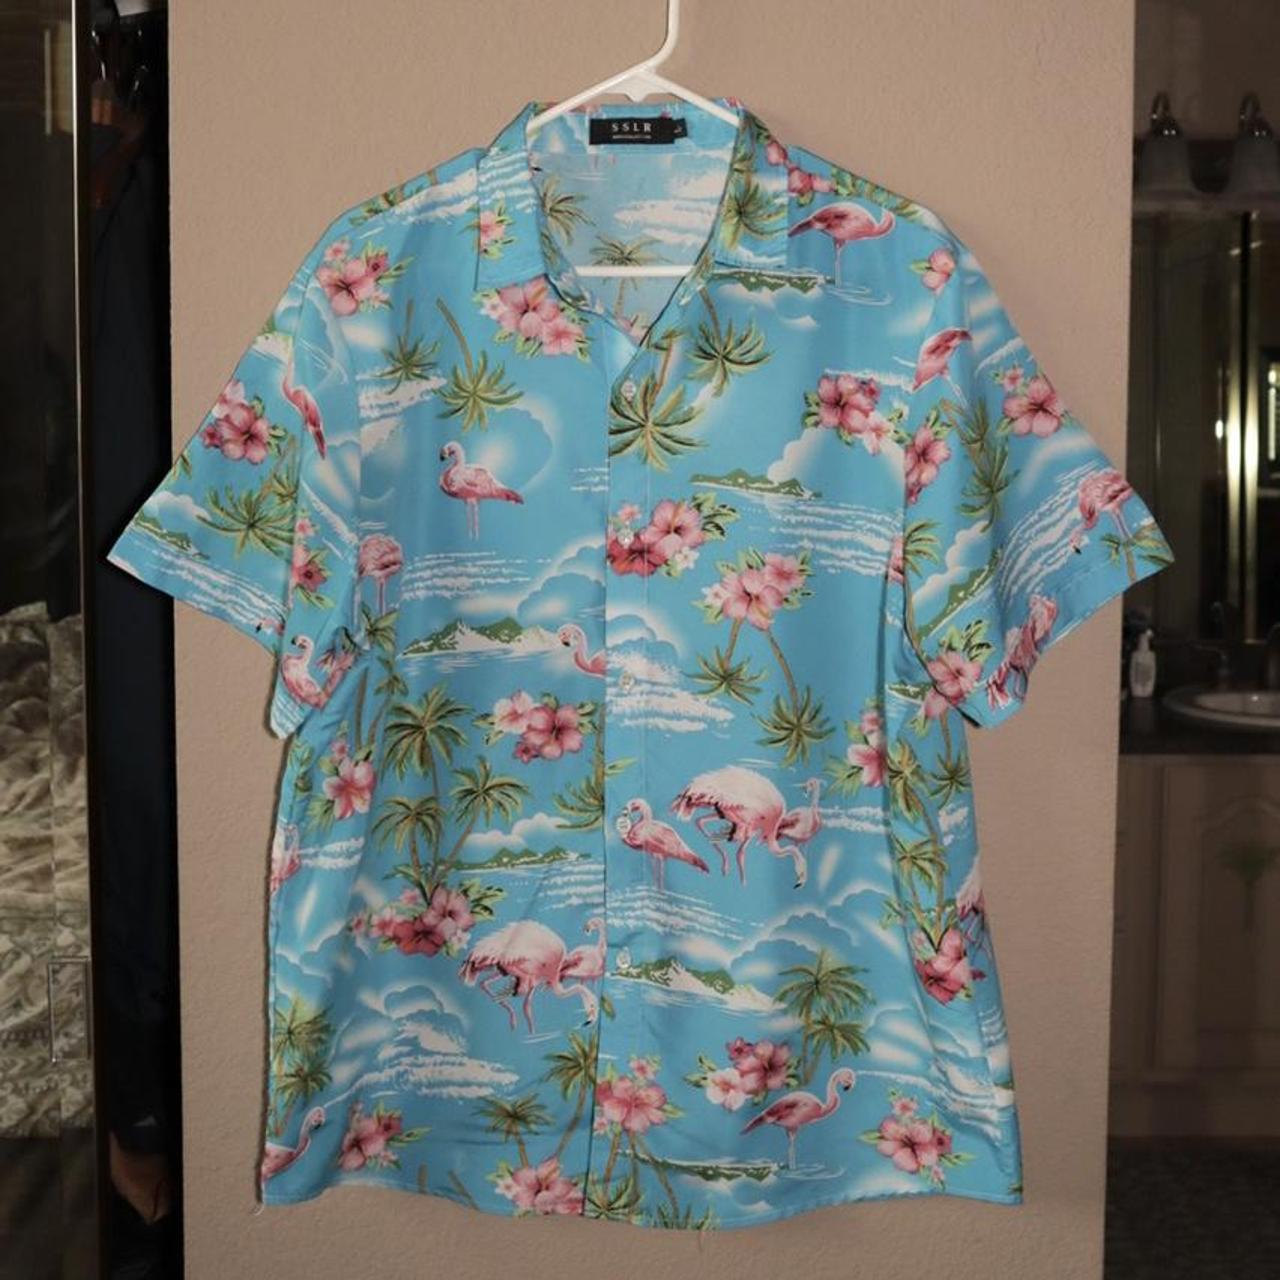 Product Image 1 - Flamingo/Palm Tree button up shirt